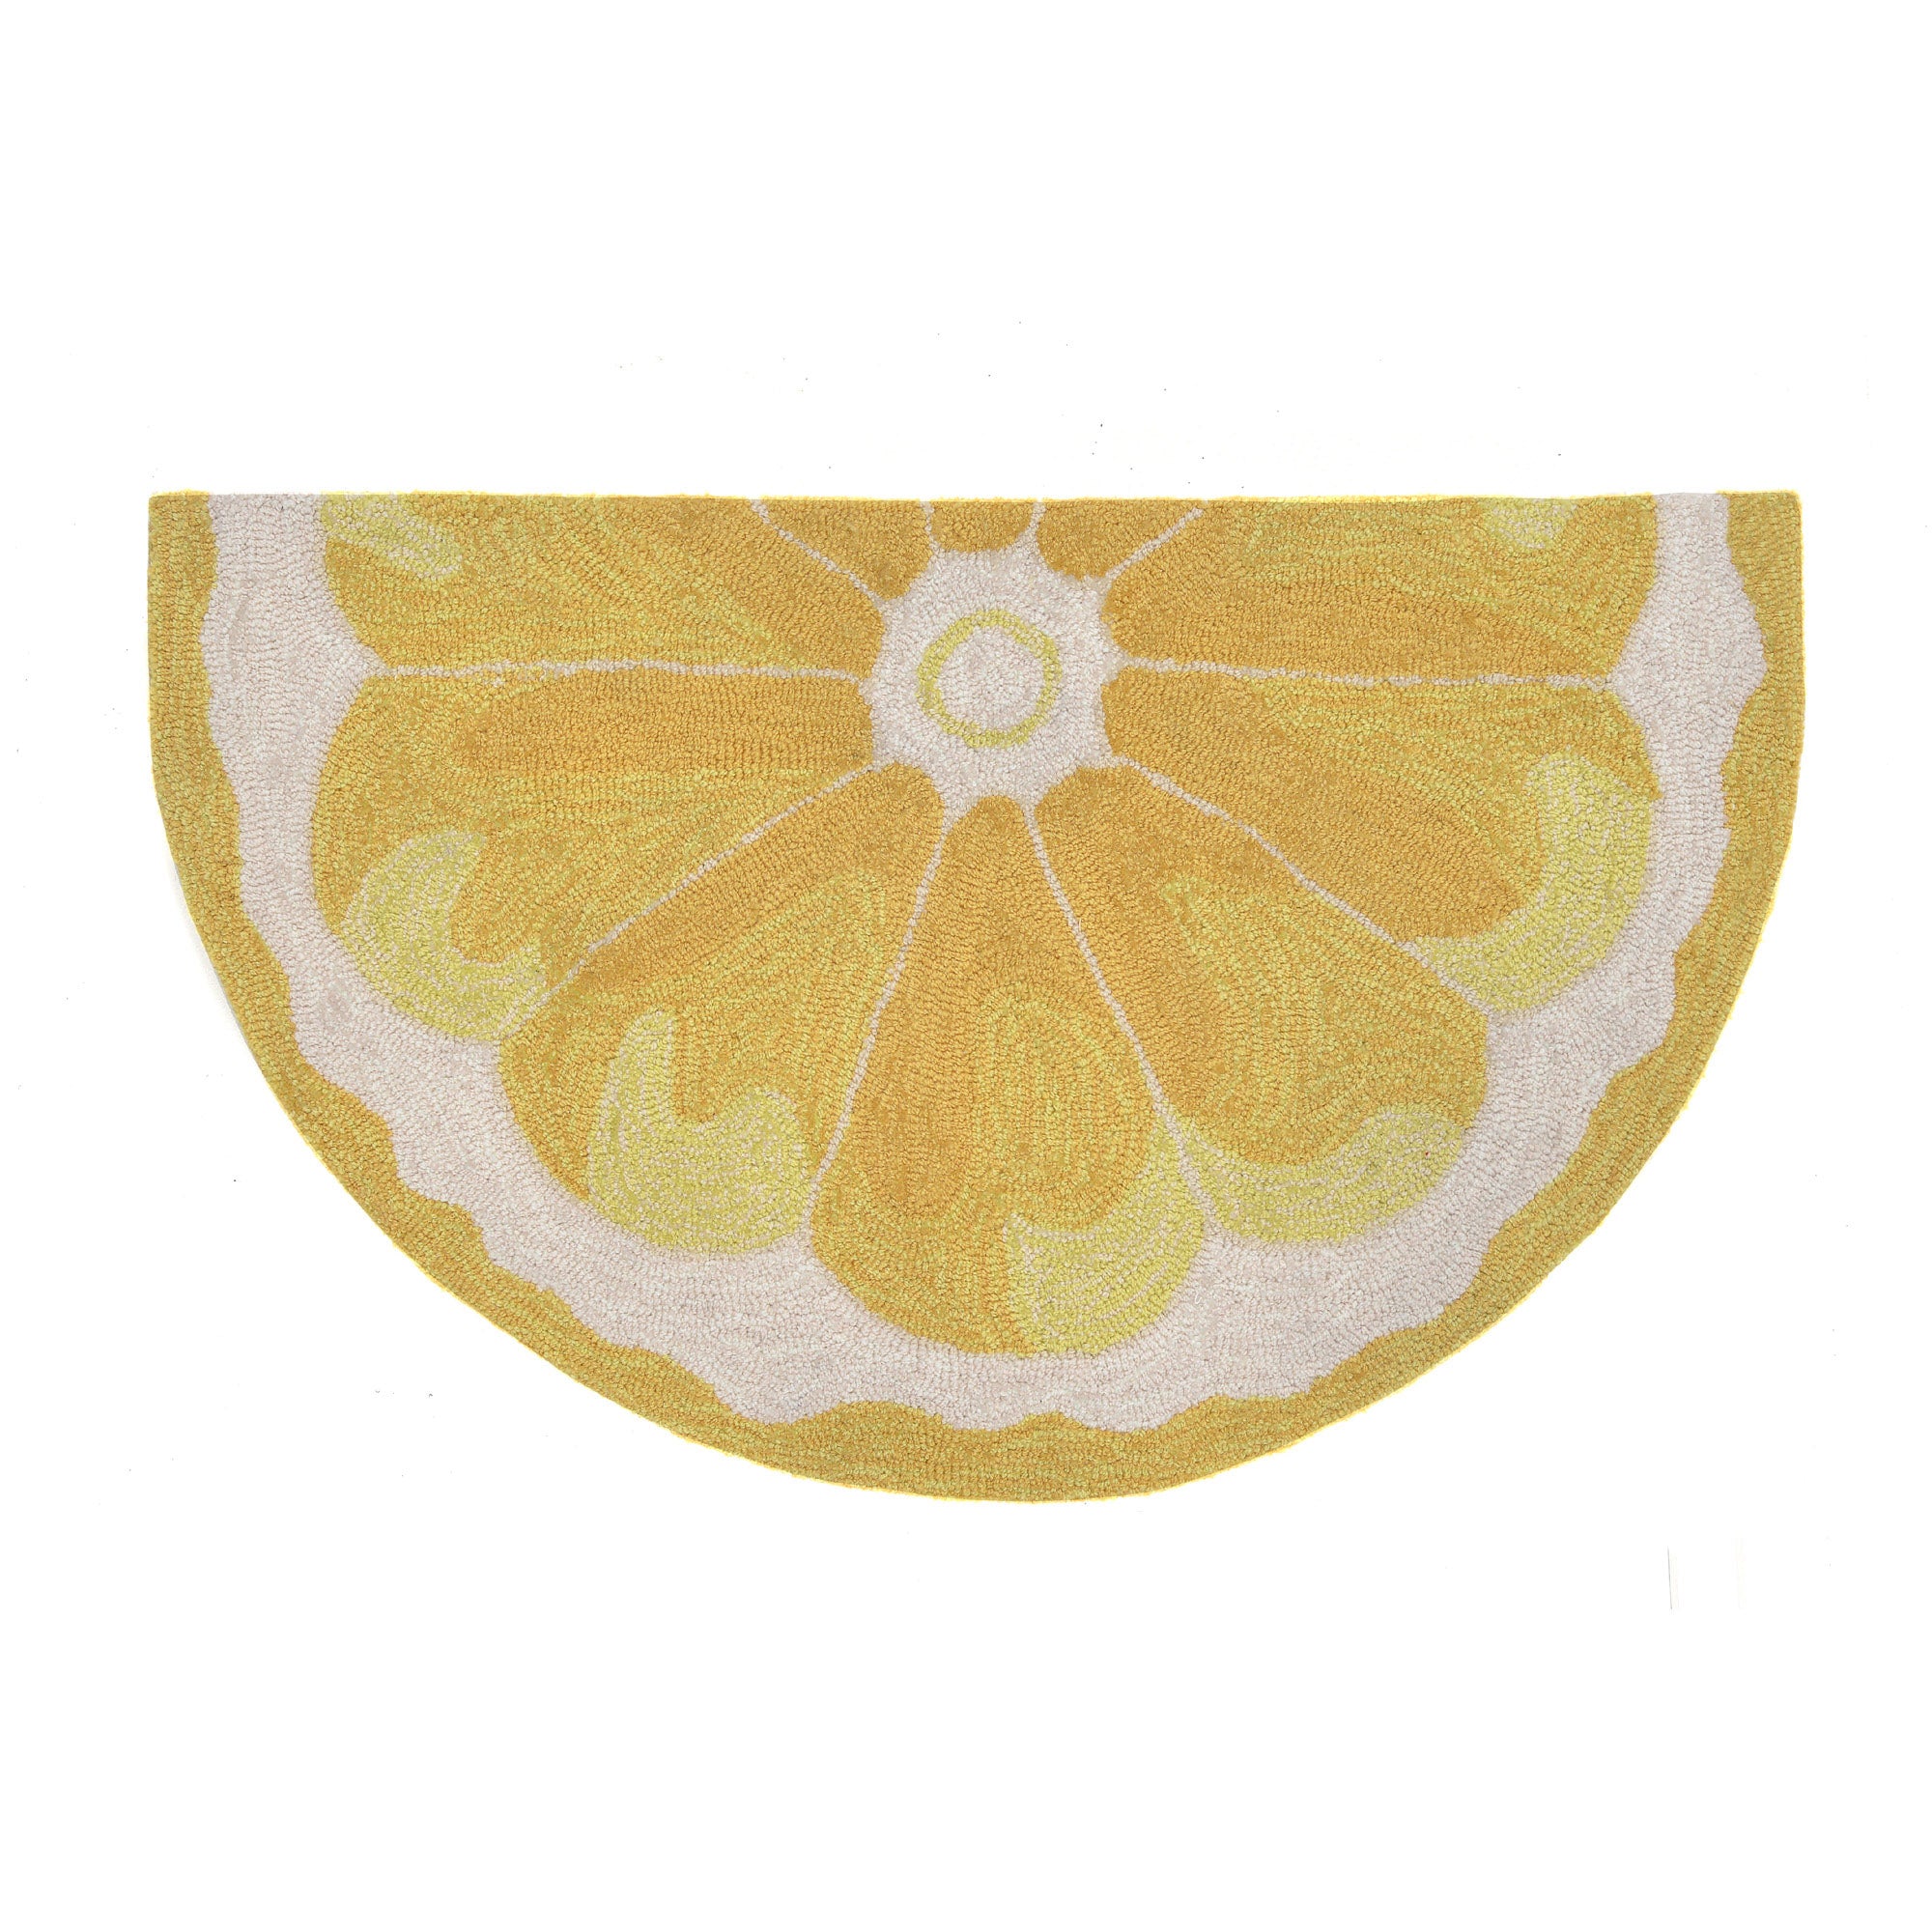 FRONTPORCH Lemon Slice Yellow